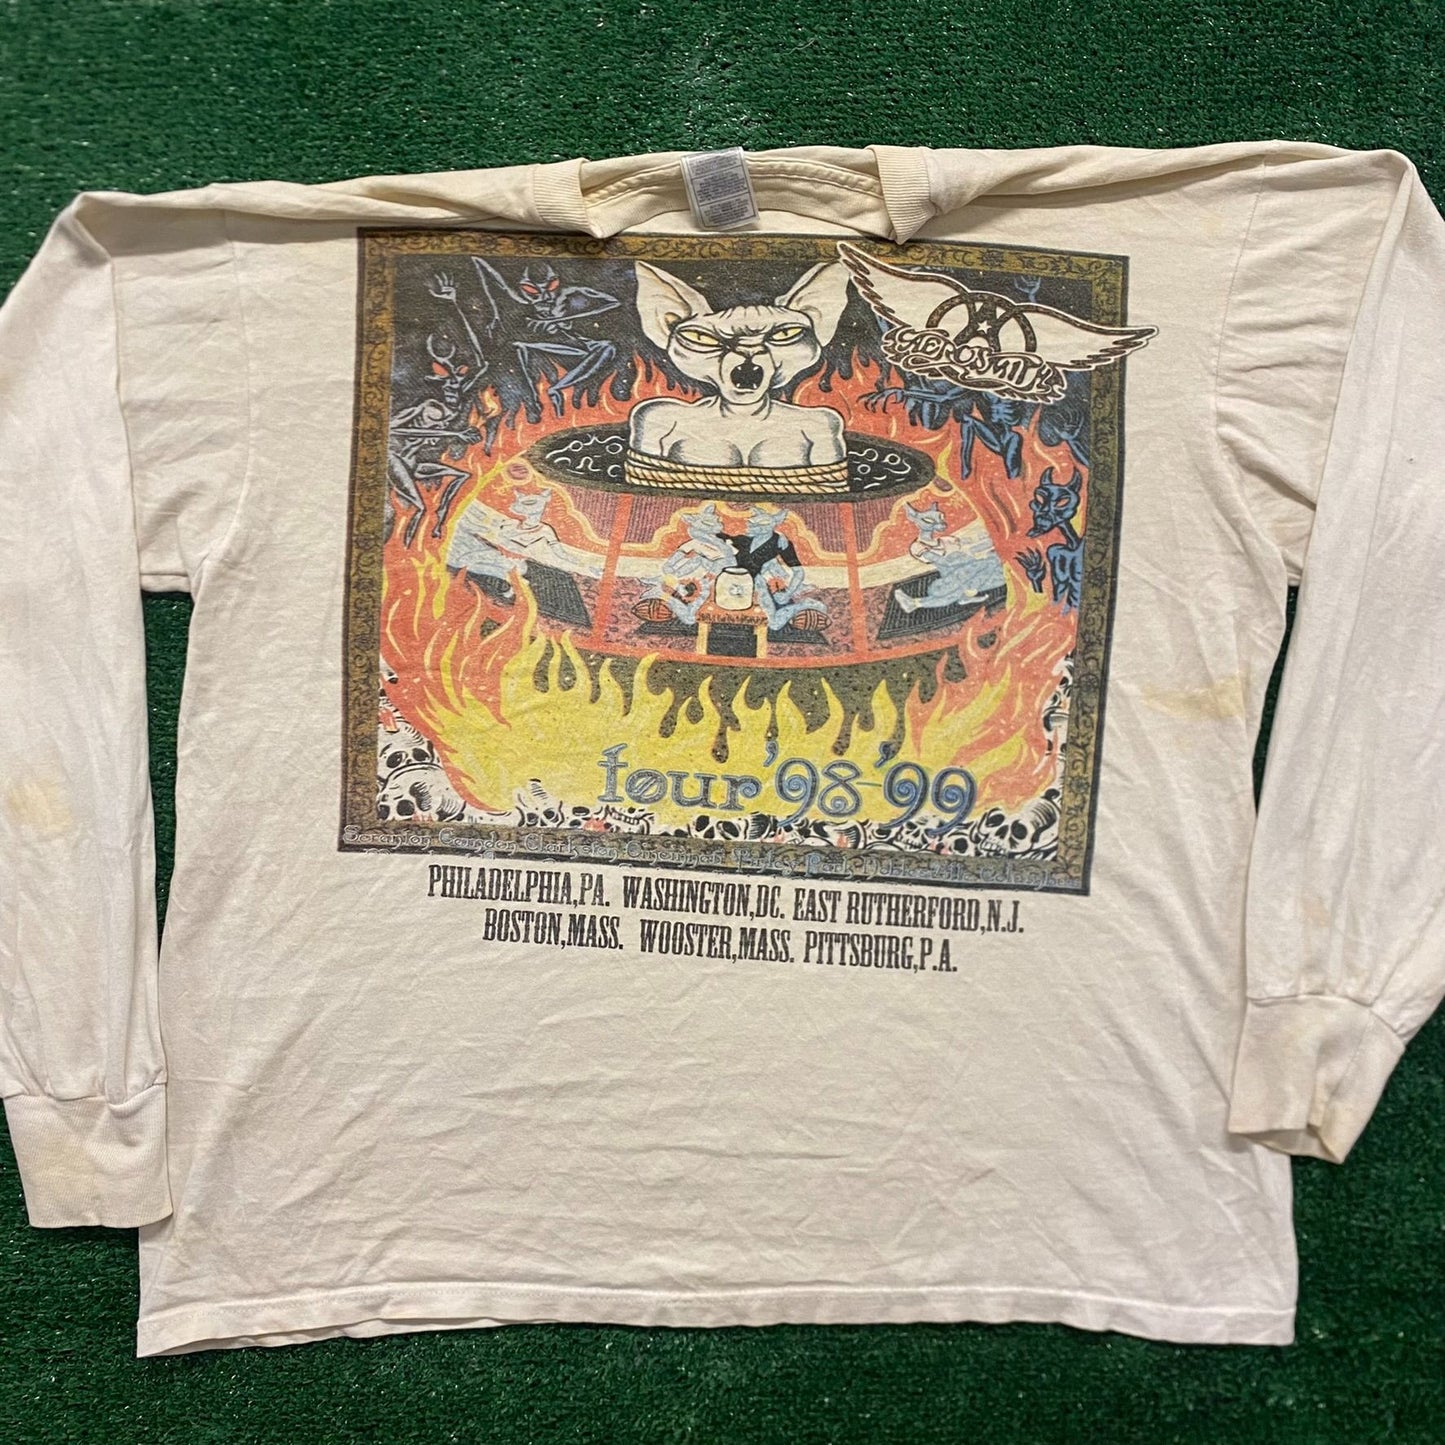 Aerosmith Nine Lives Vintage 90s Band T-Shirt